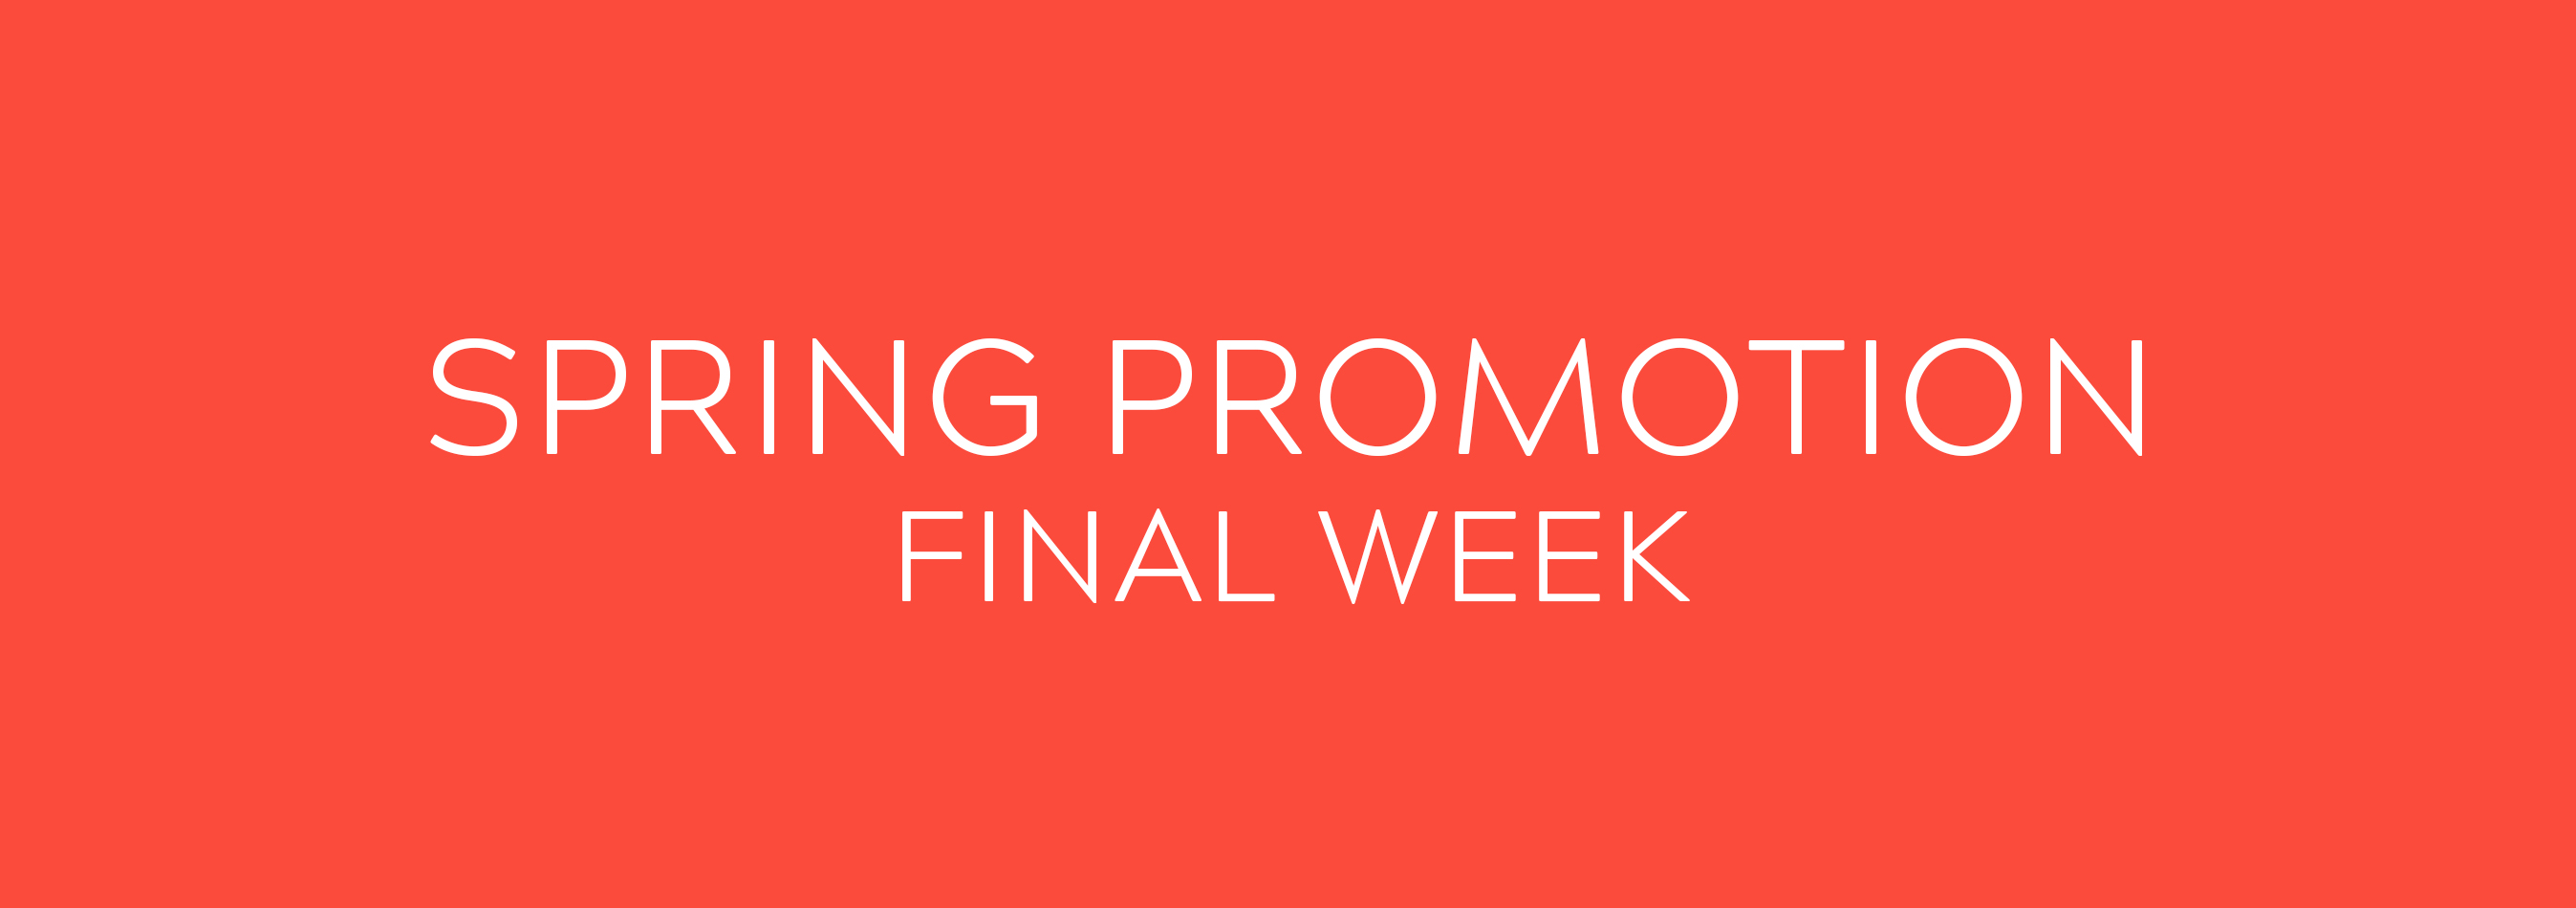 Spring Promotion - Final Week